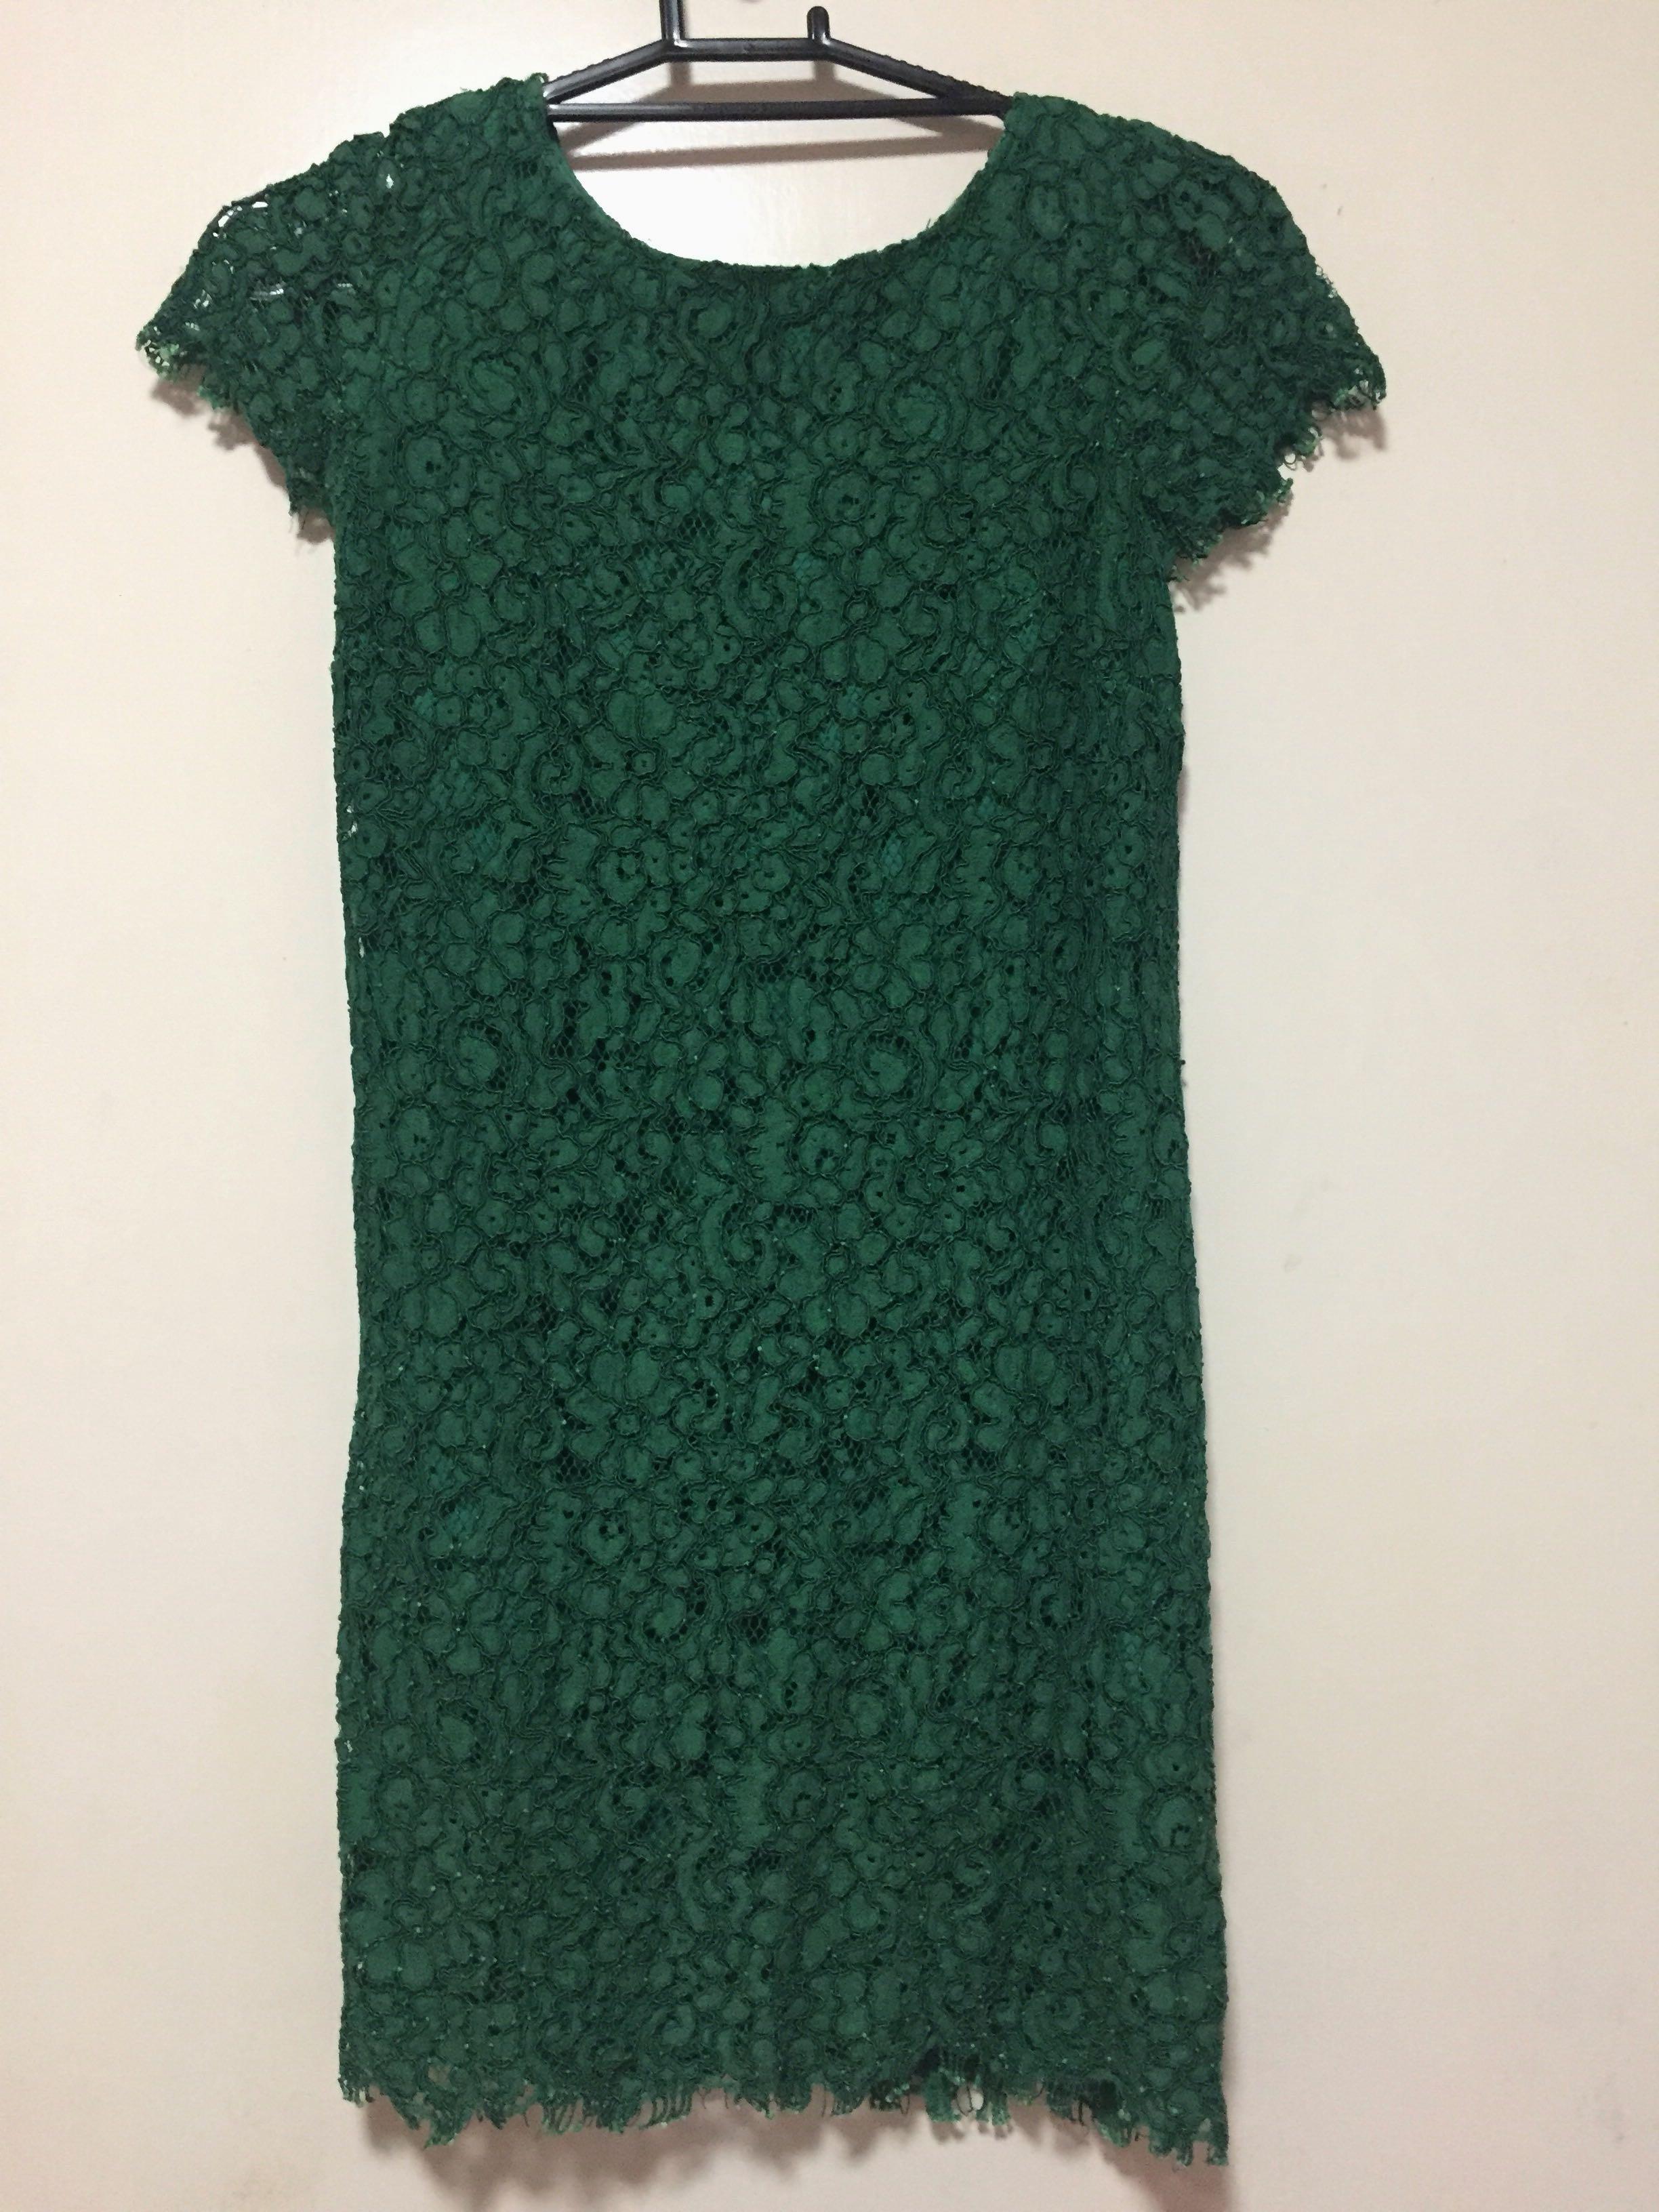 zara green lace dress